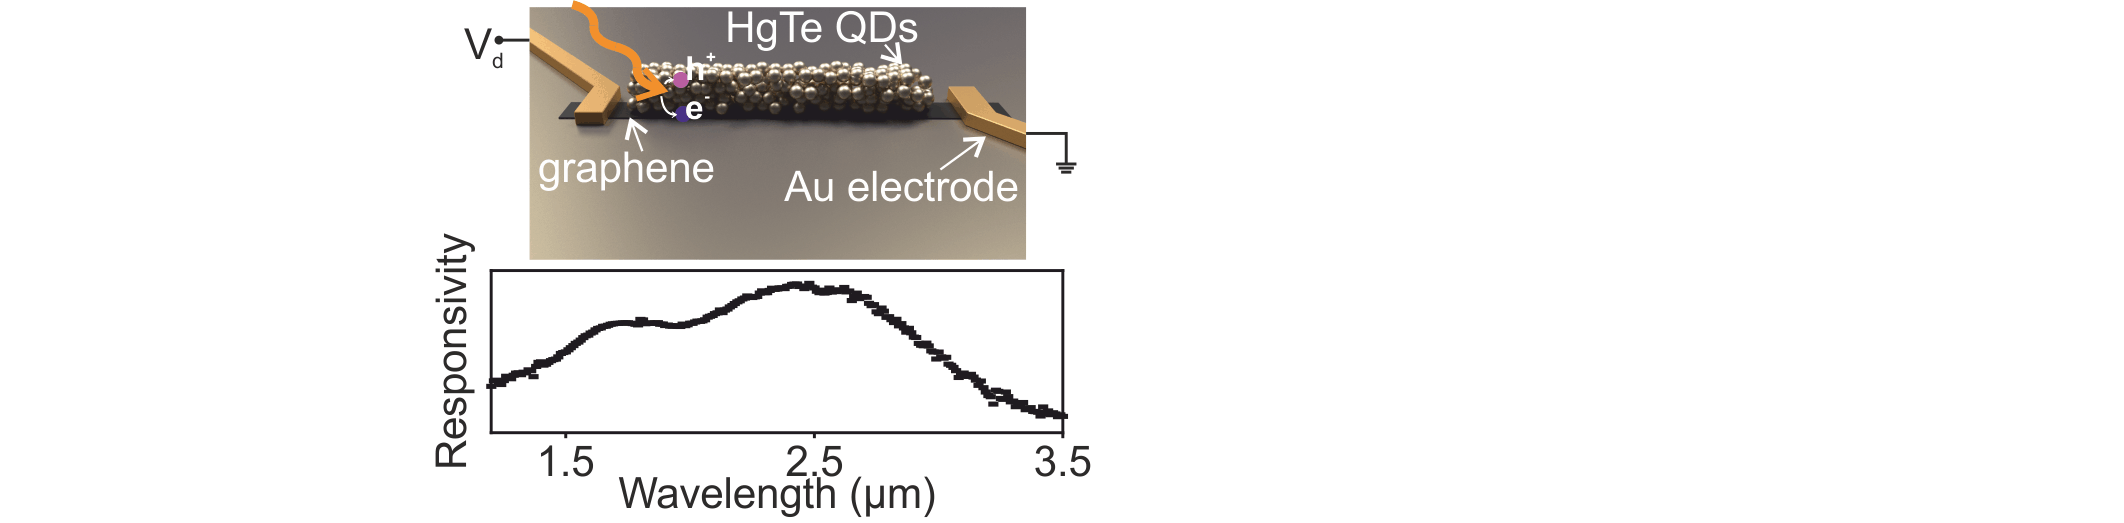 Colloidal HgTe Quantum Dot/Graphene Phototransistor with a Spectral Sensitivity Beyond 3 µm